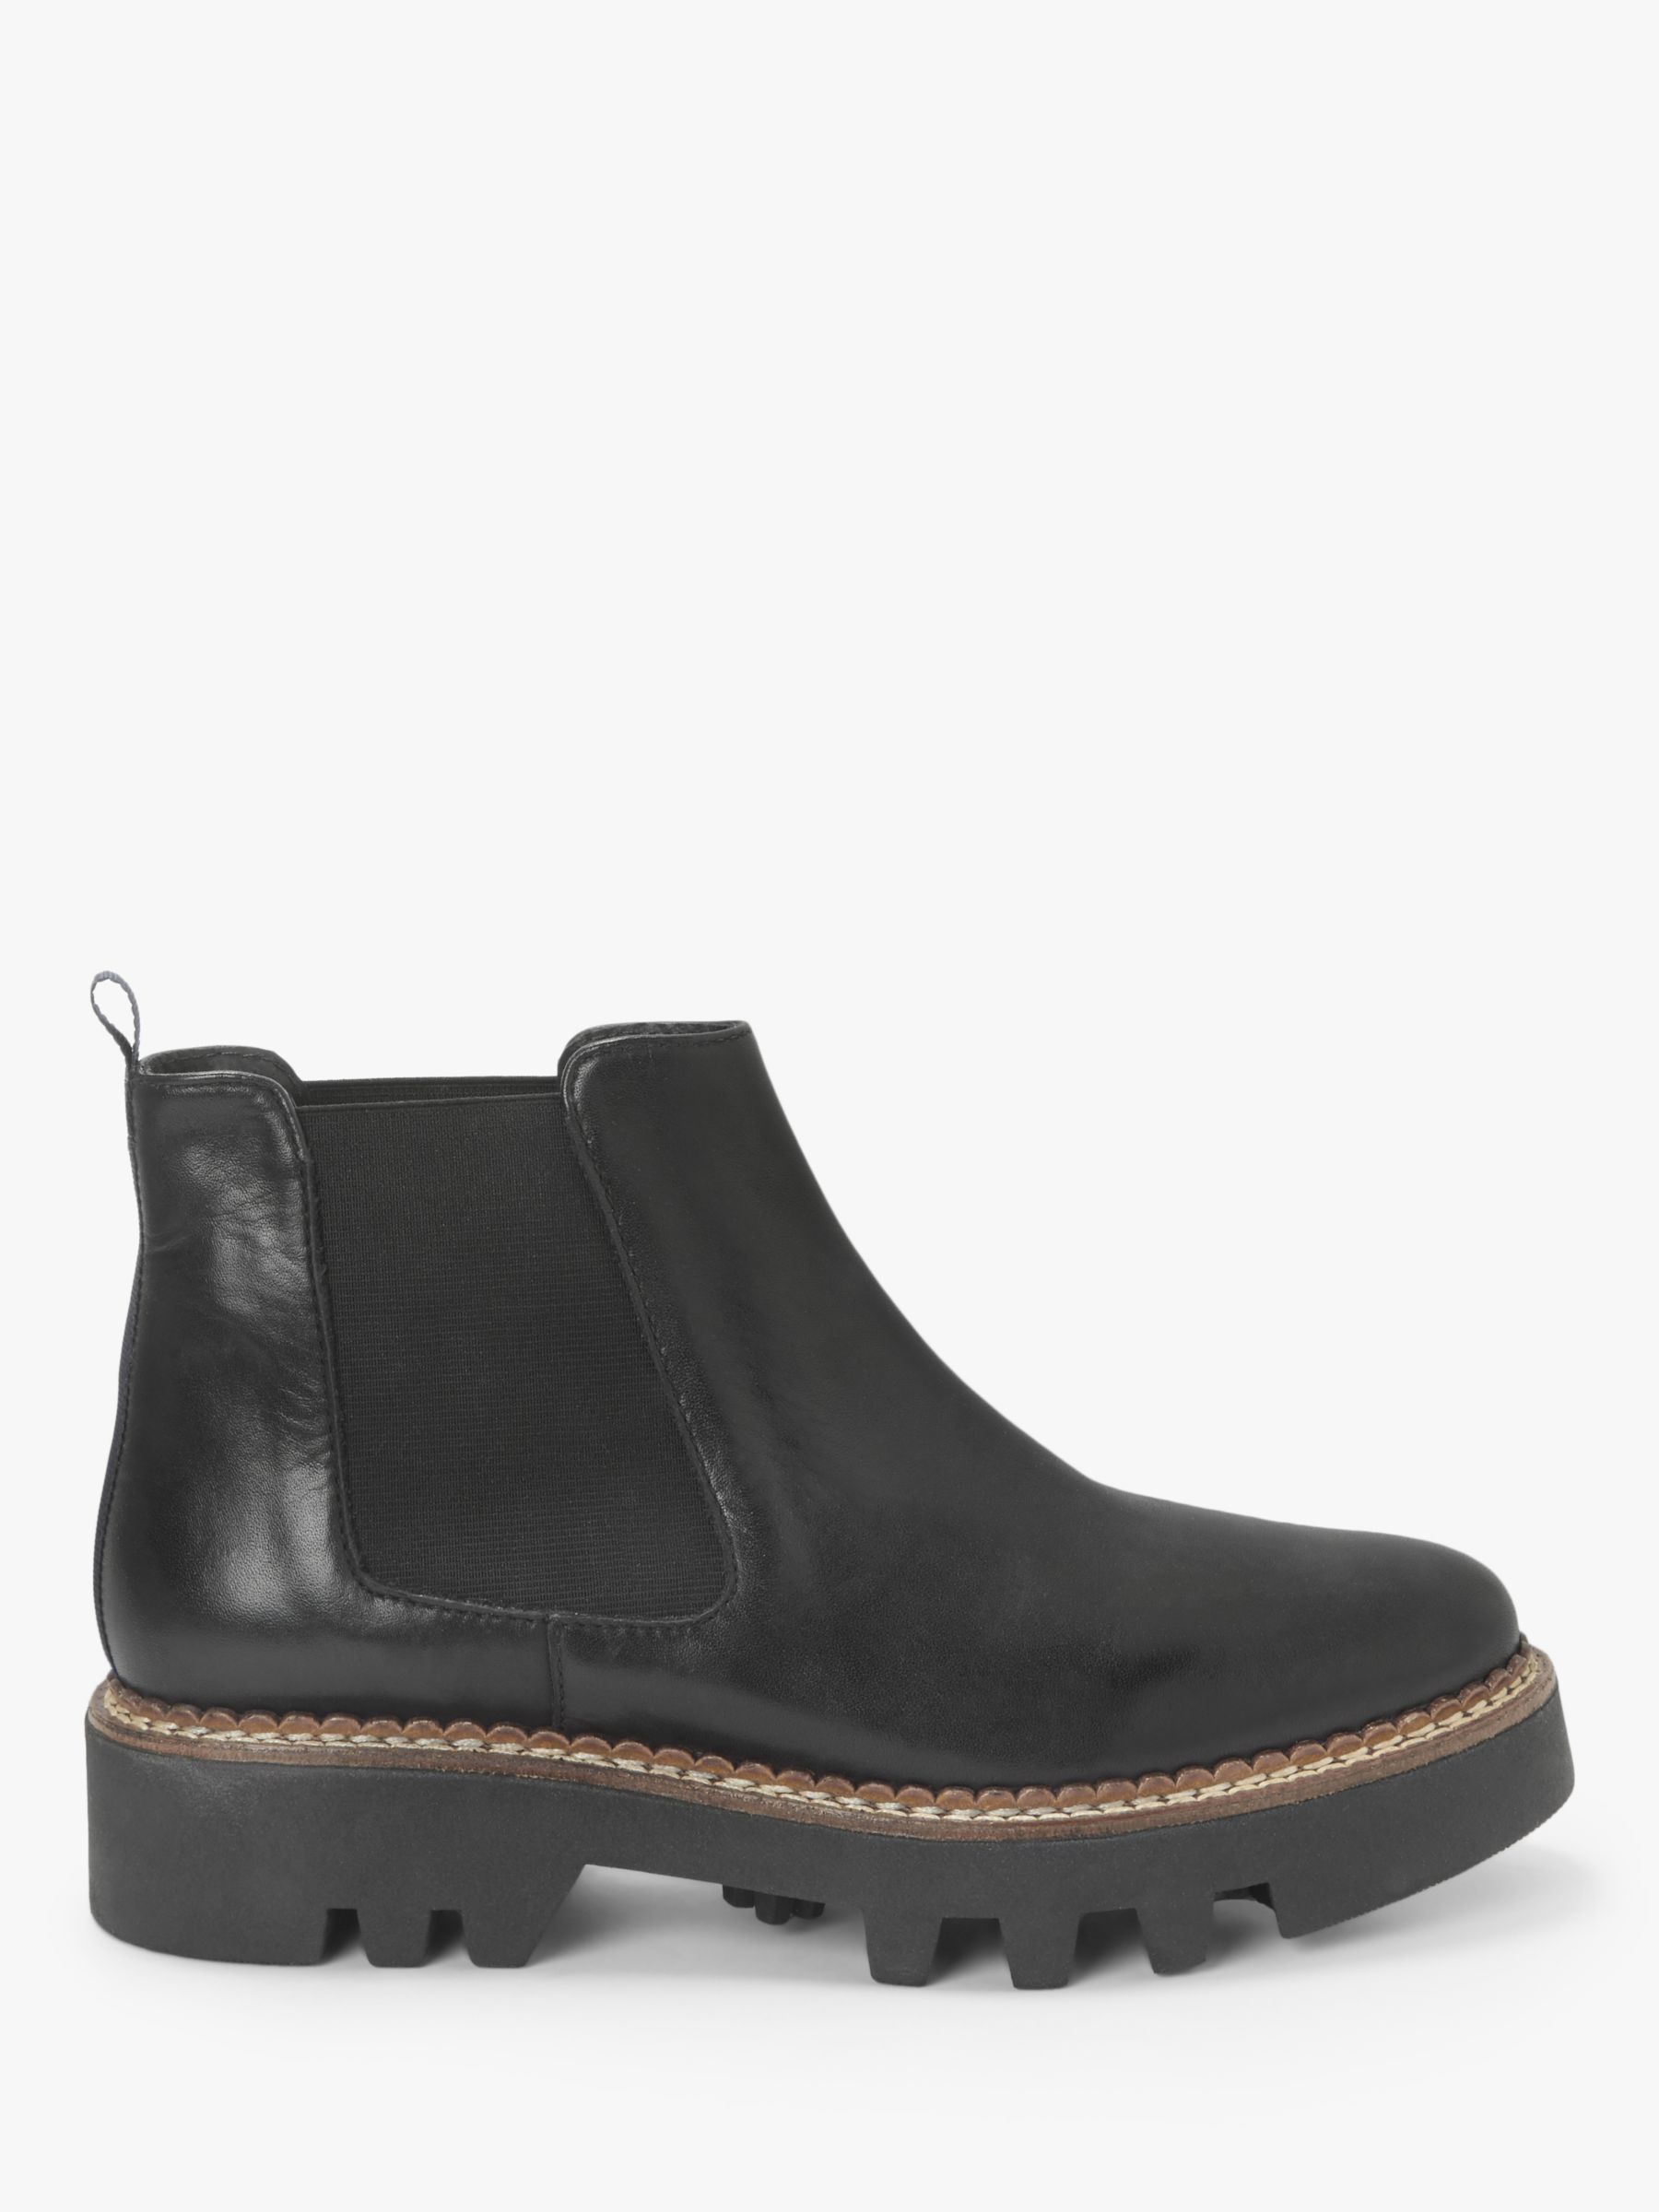 Kin Paisley Leather Platform Chelsea Boots, Black